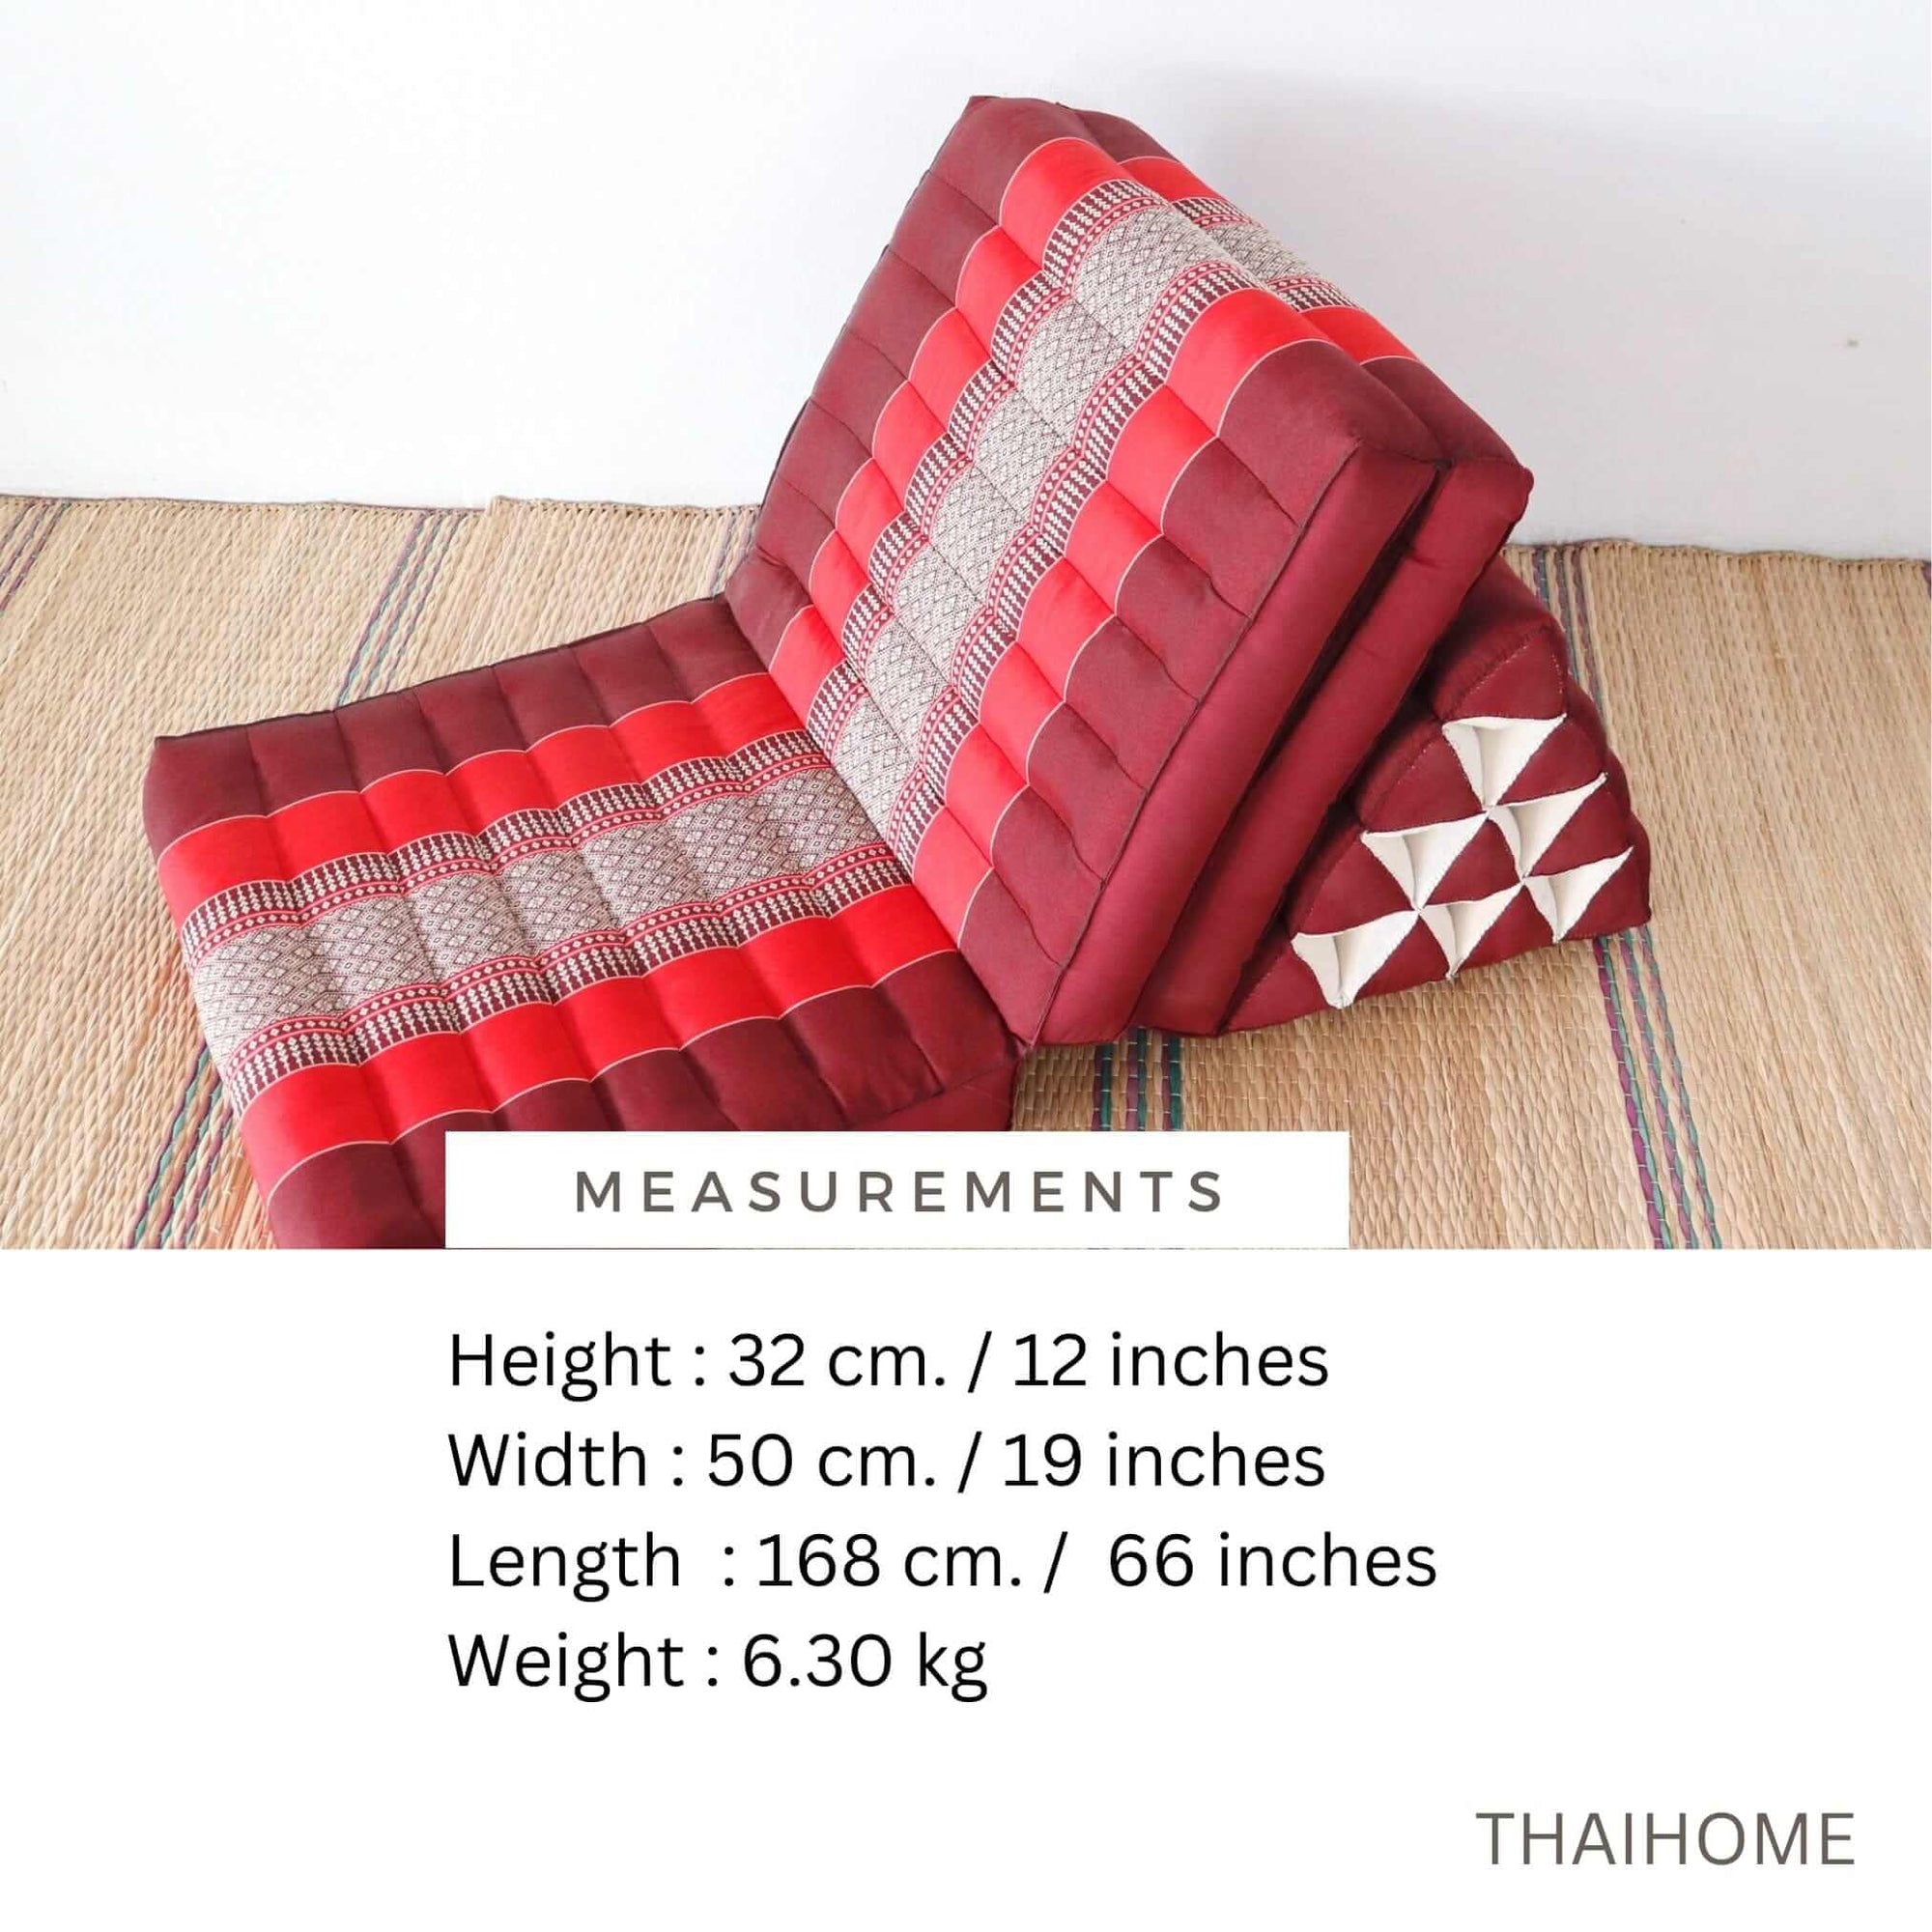 THANAYA - Thai Triangle Cushion (3-Fold - Red)